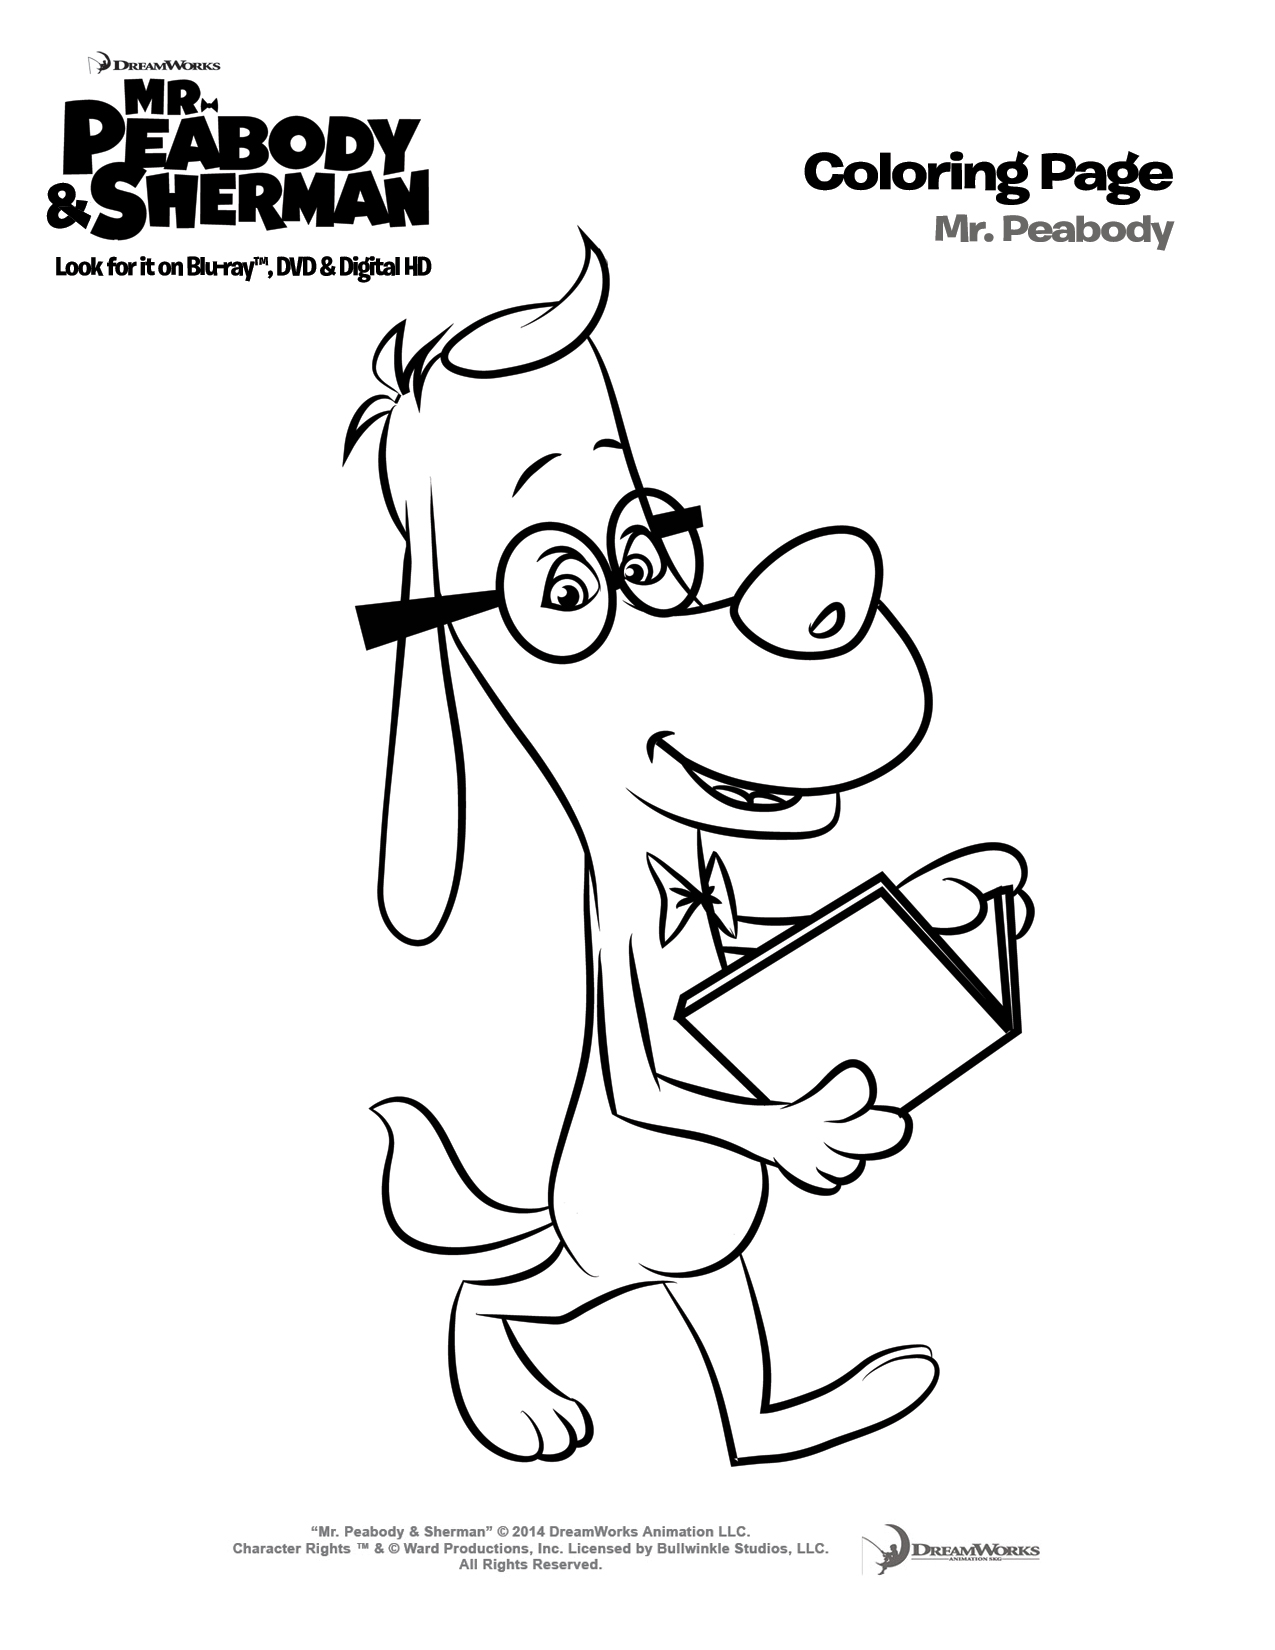 Mr. Peabody and Sherman coloring sheets